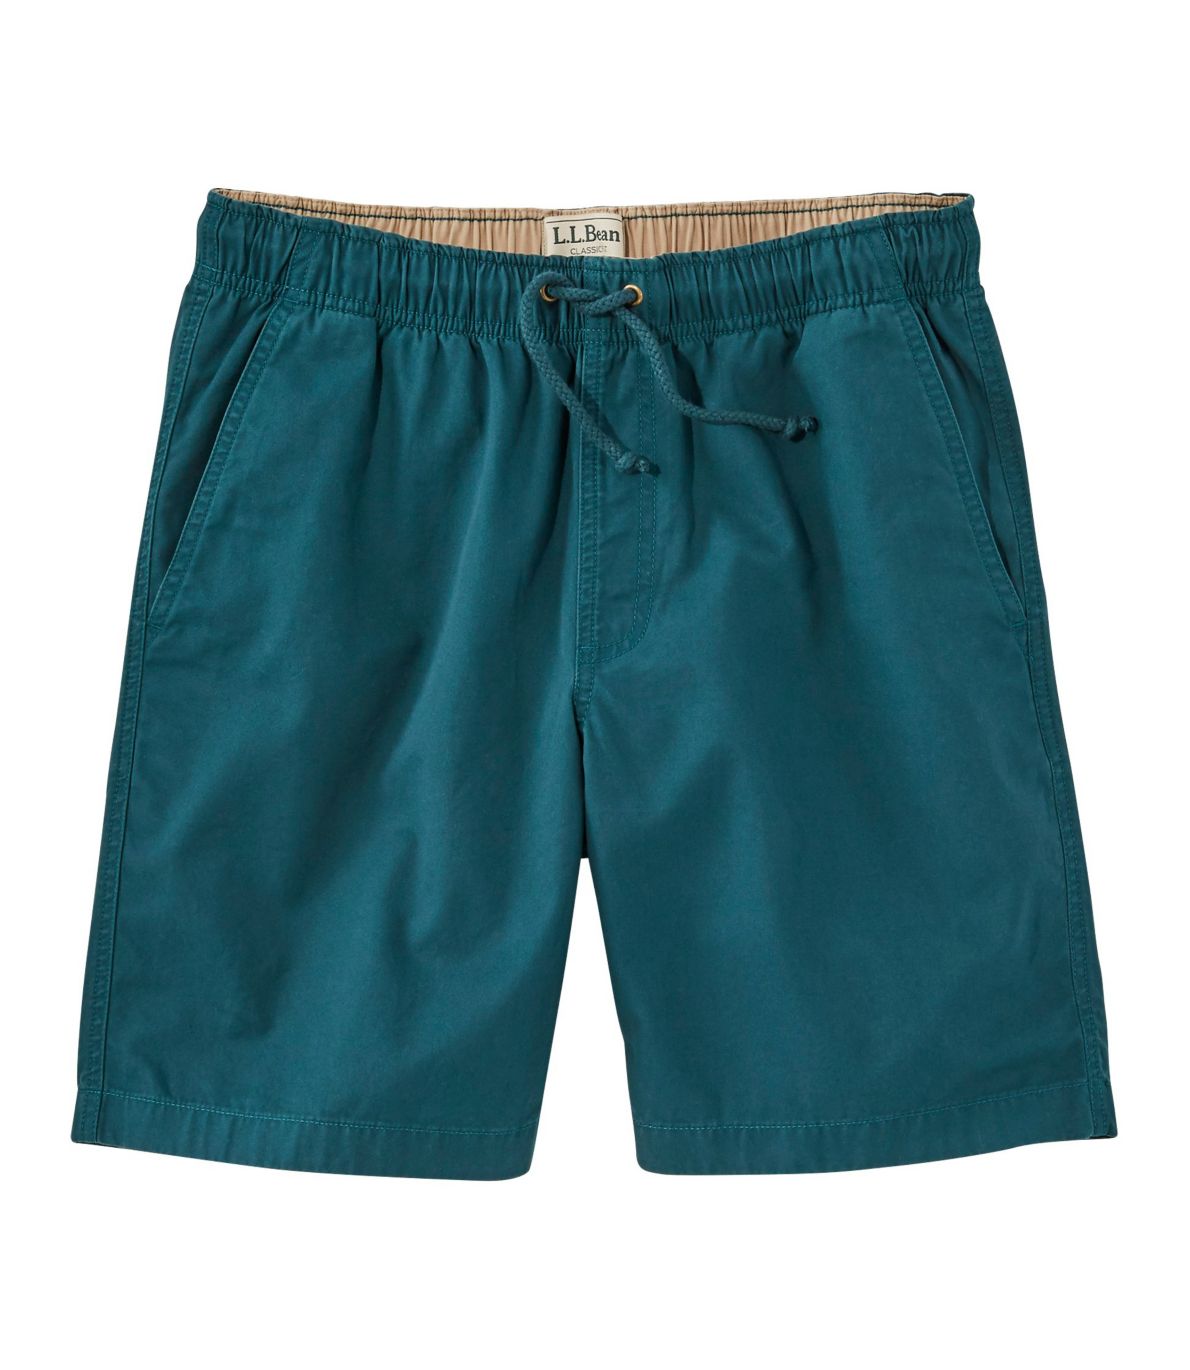 Men's Dock Shorts